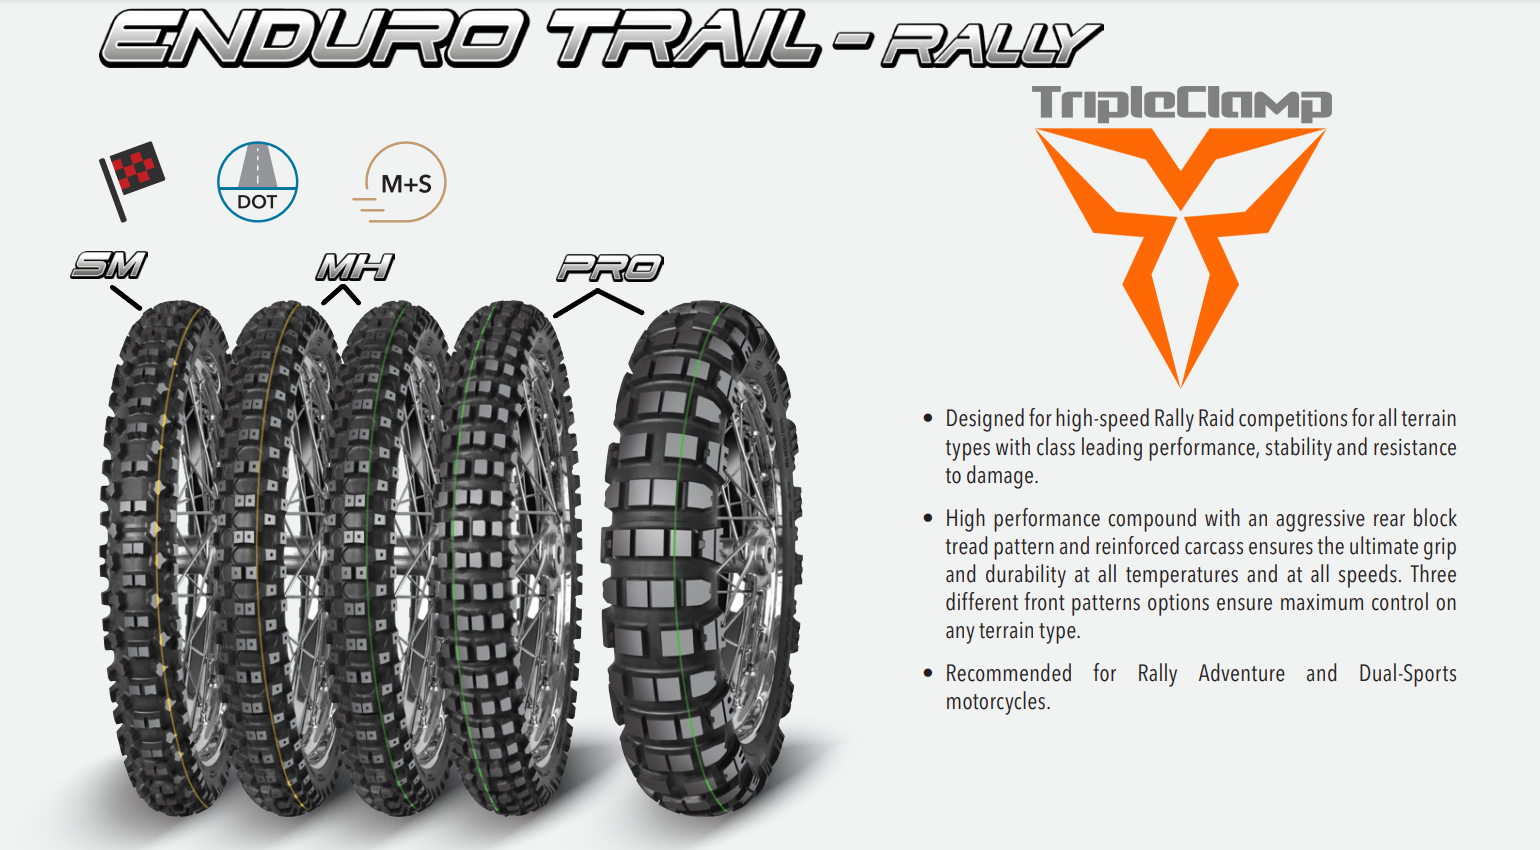 Mitas - Enduro Trail Rally SM Tire